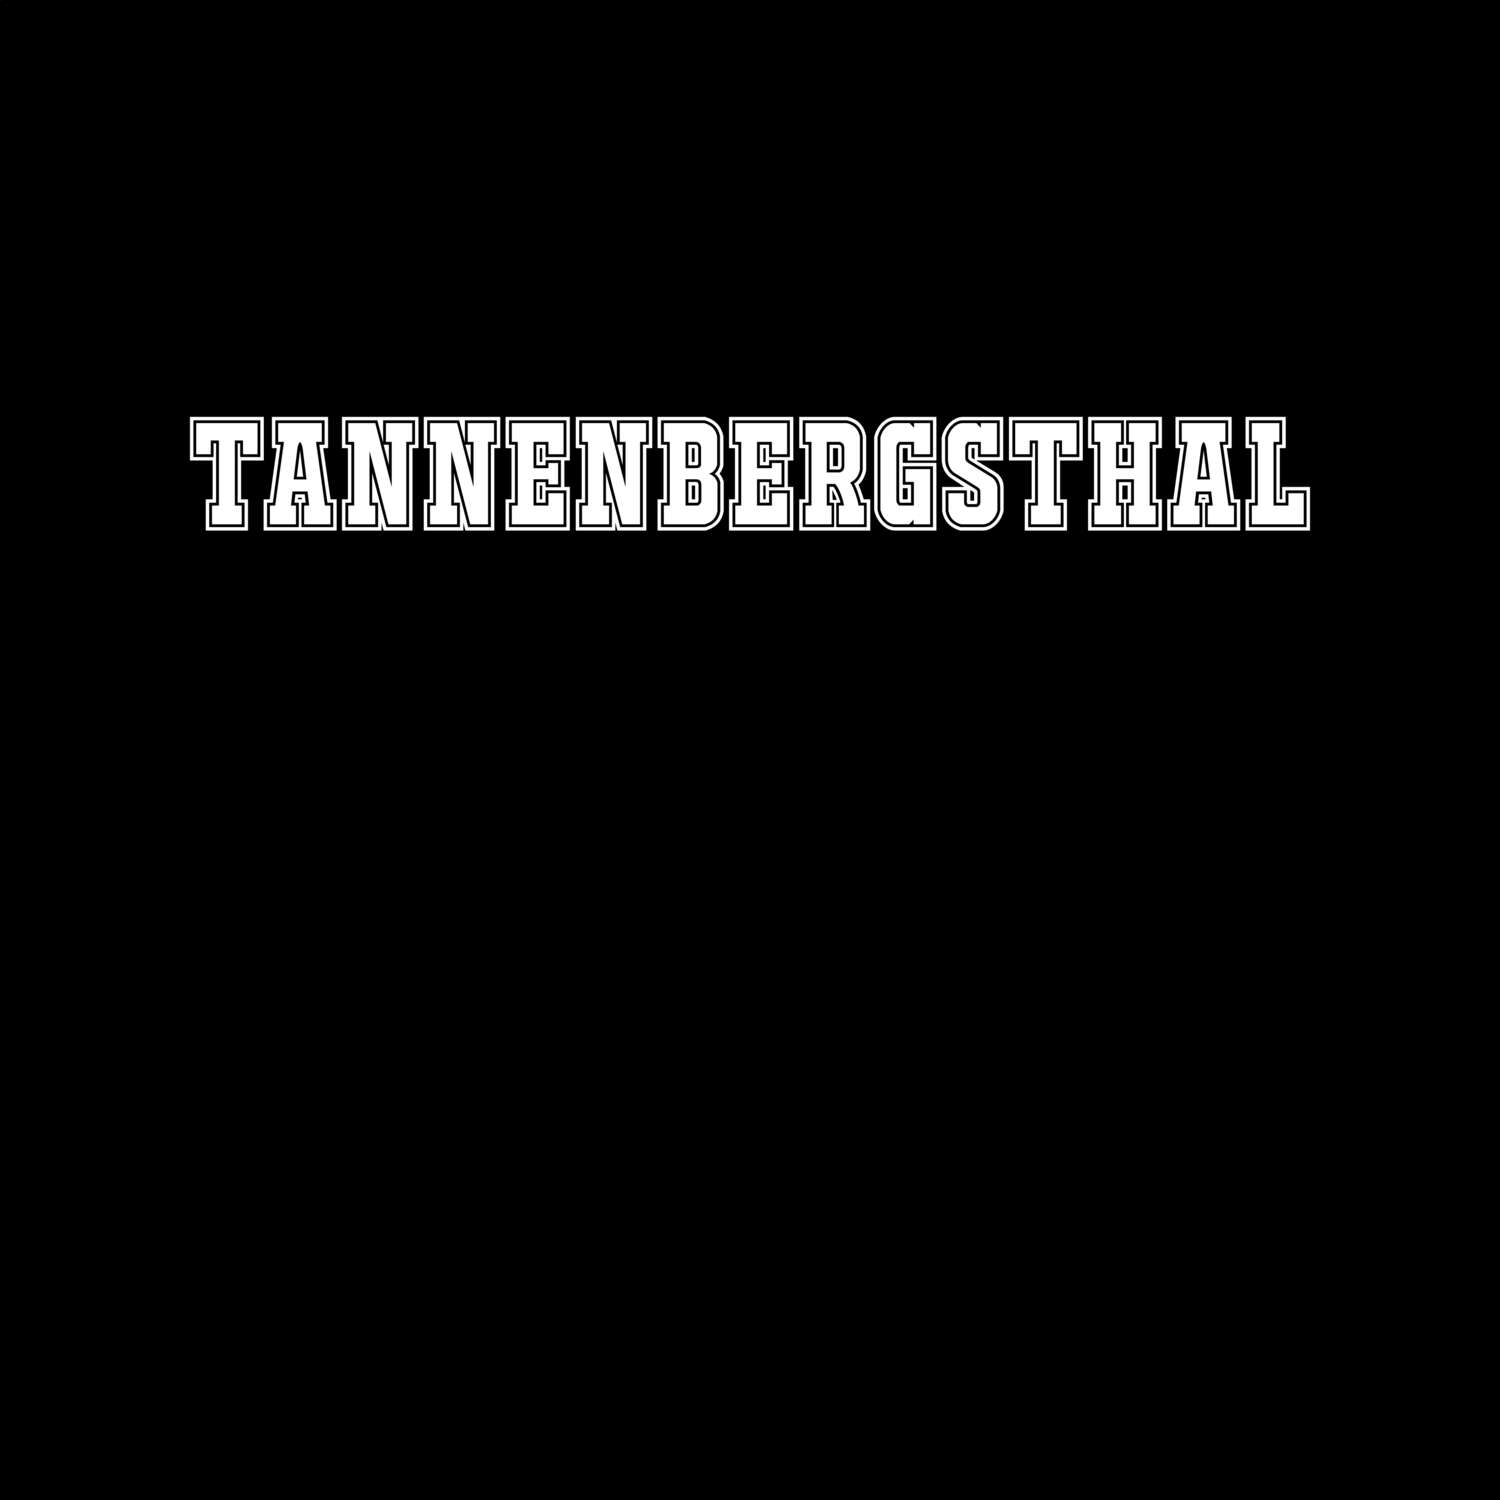 Tannenbergsthal T-Shirt »Classic«